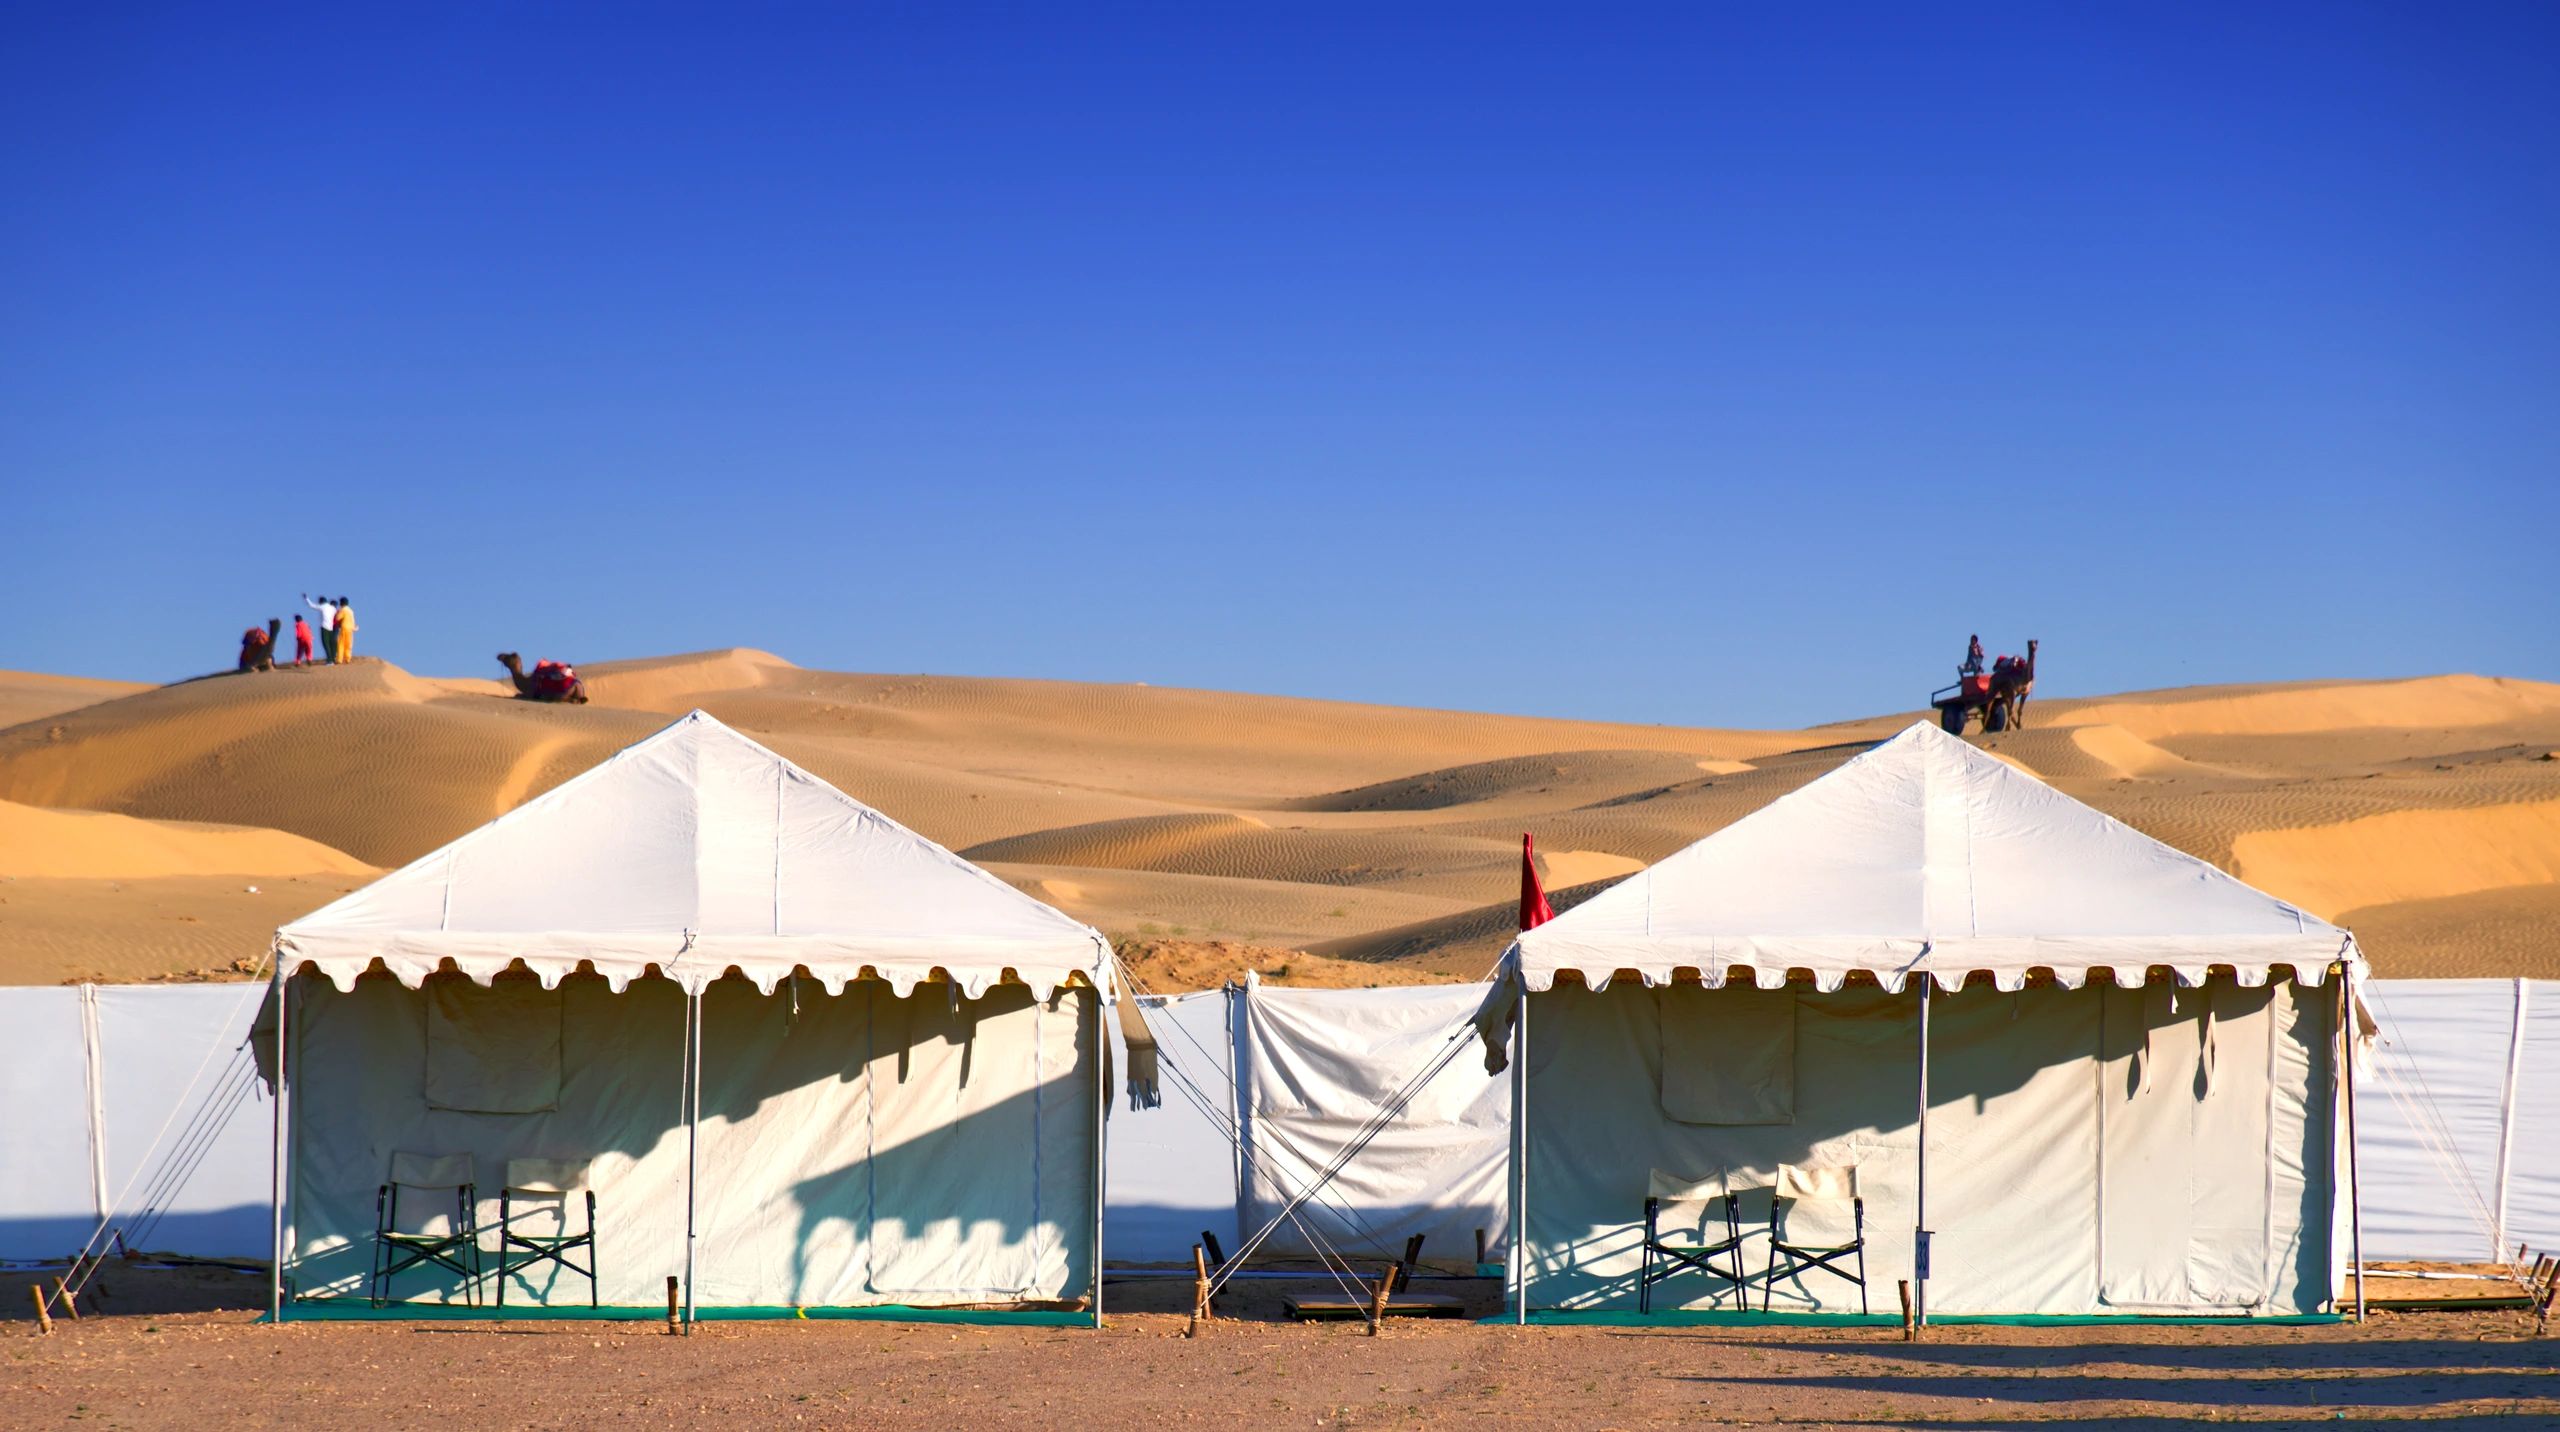 Camps in the Sam Sand Dunes, Jaisalmer